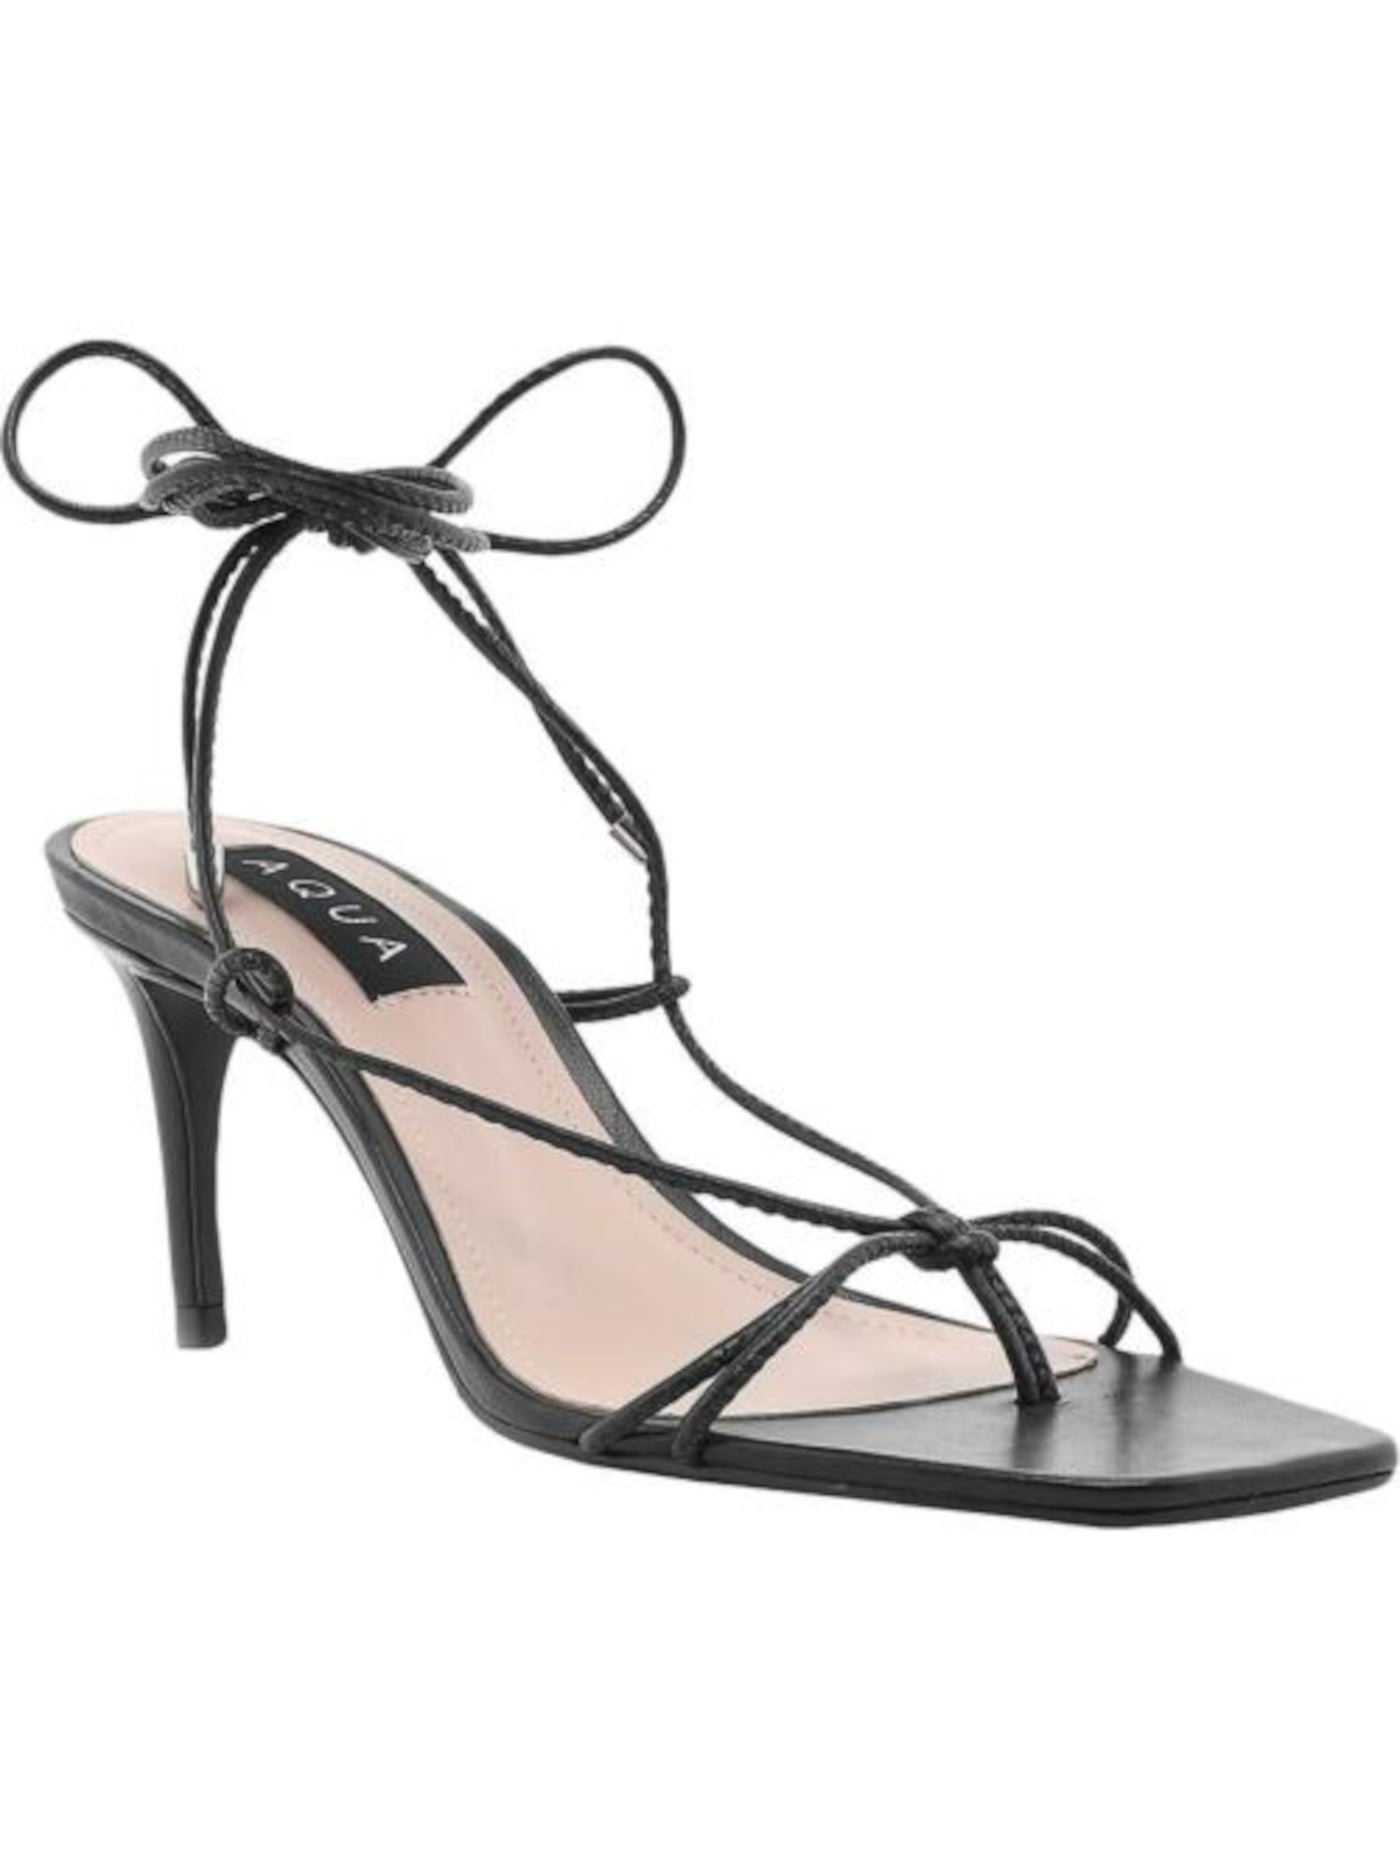 AQUA Womens Black Toe-Loop Strappy Padded Dirlene Square Toe Kitten Heel Lace-Up Leather Dress Sandals Shoes 7.5 B